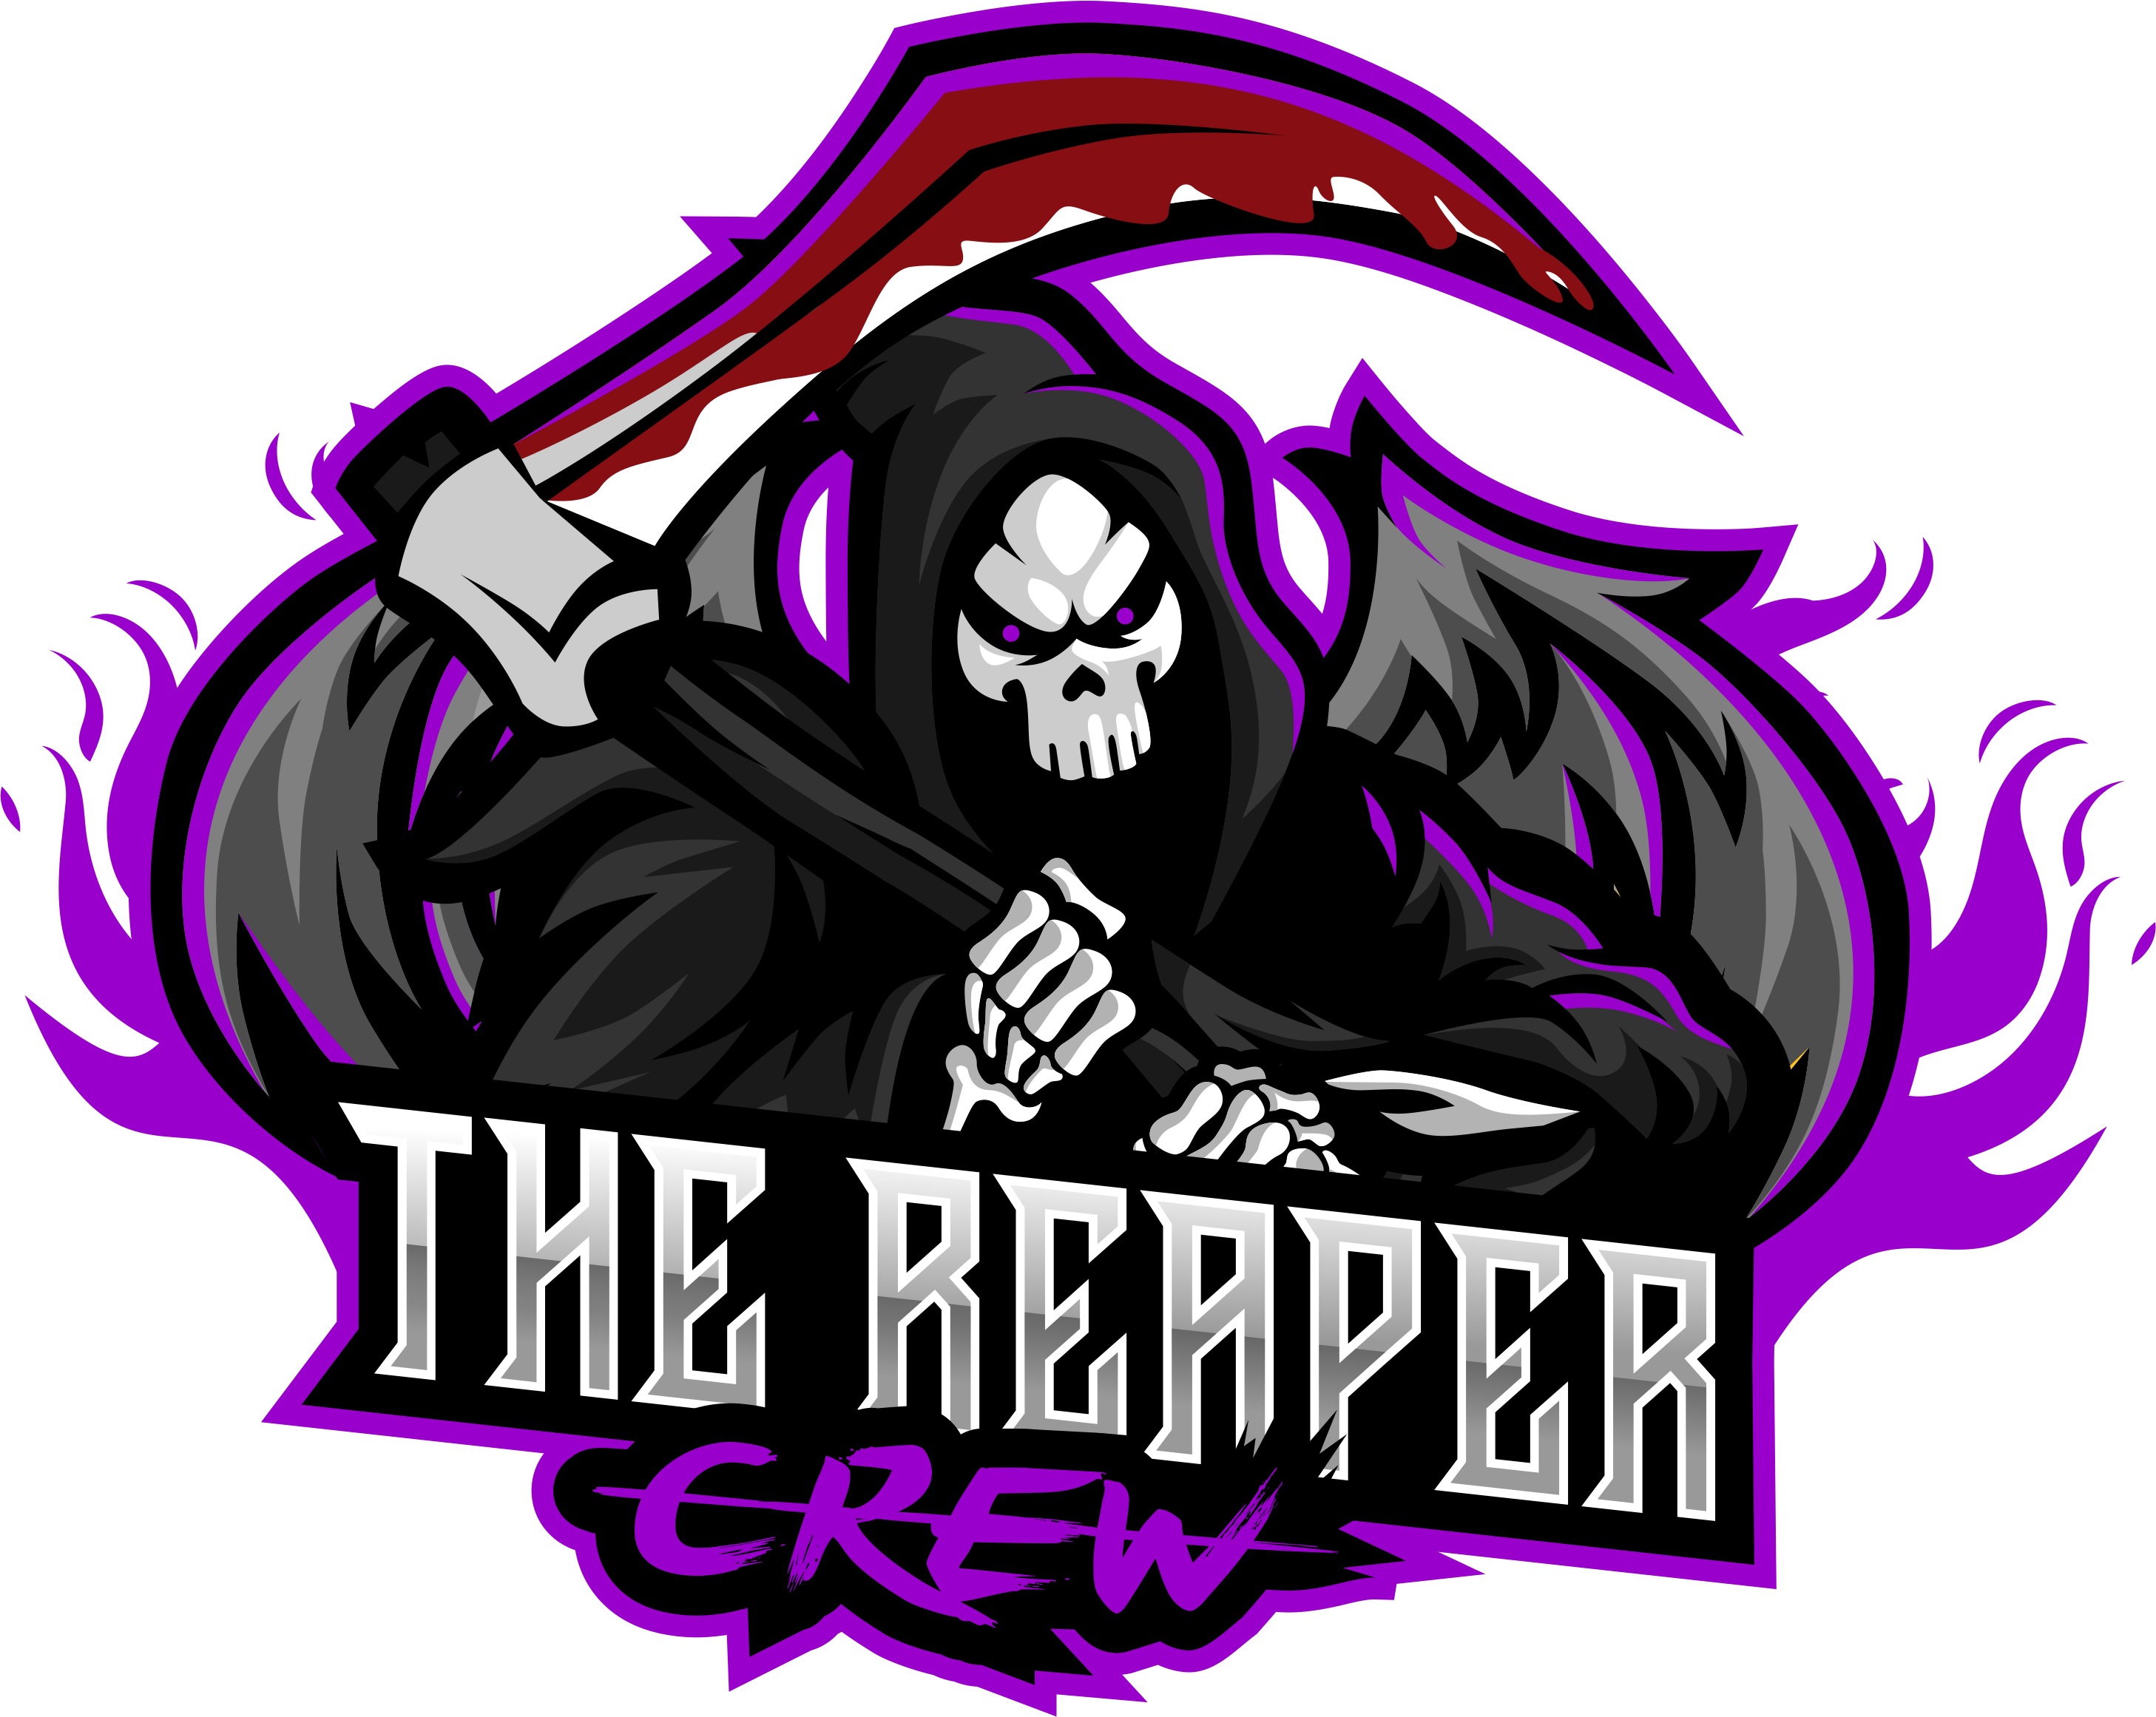 The Reaper Crew Logo